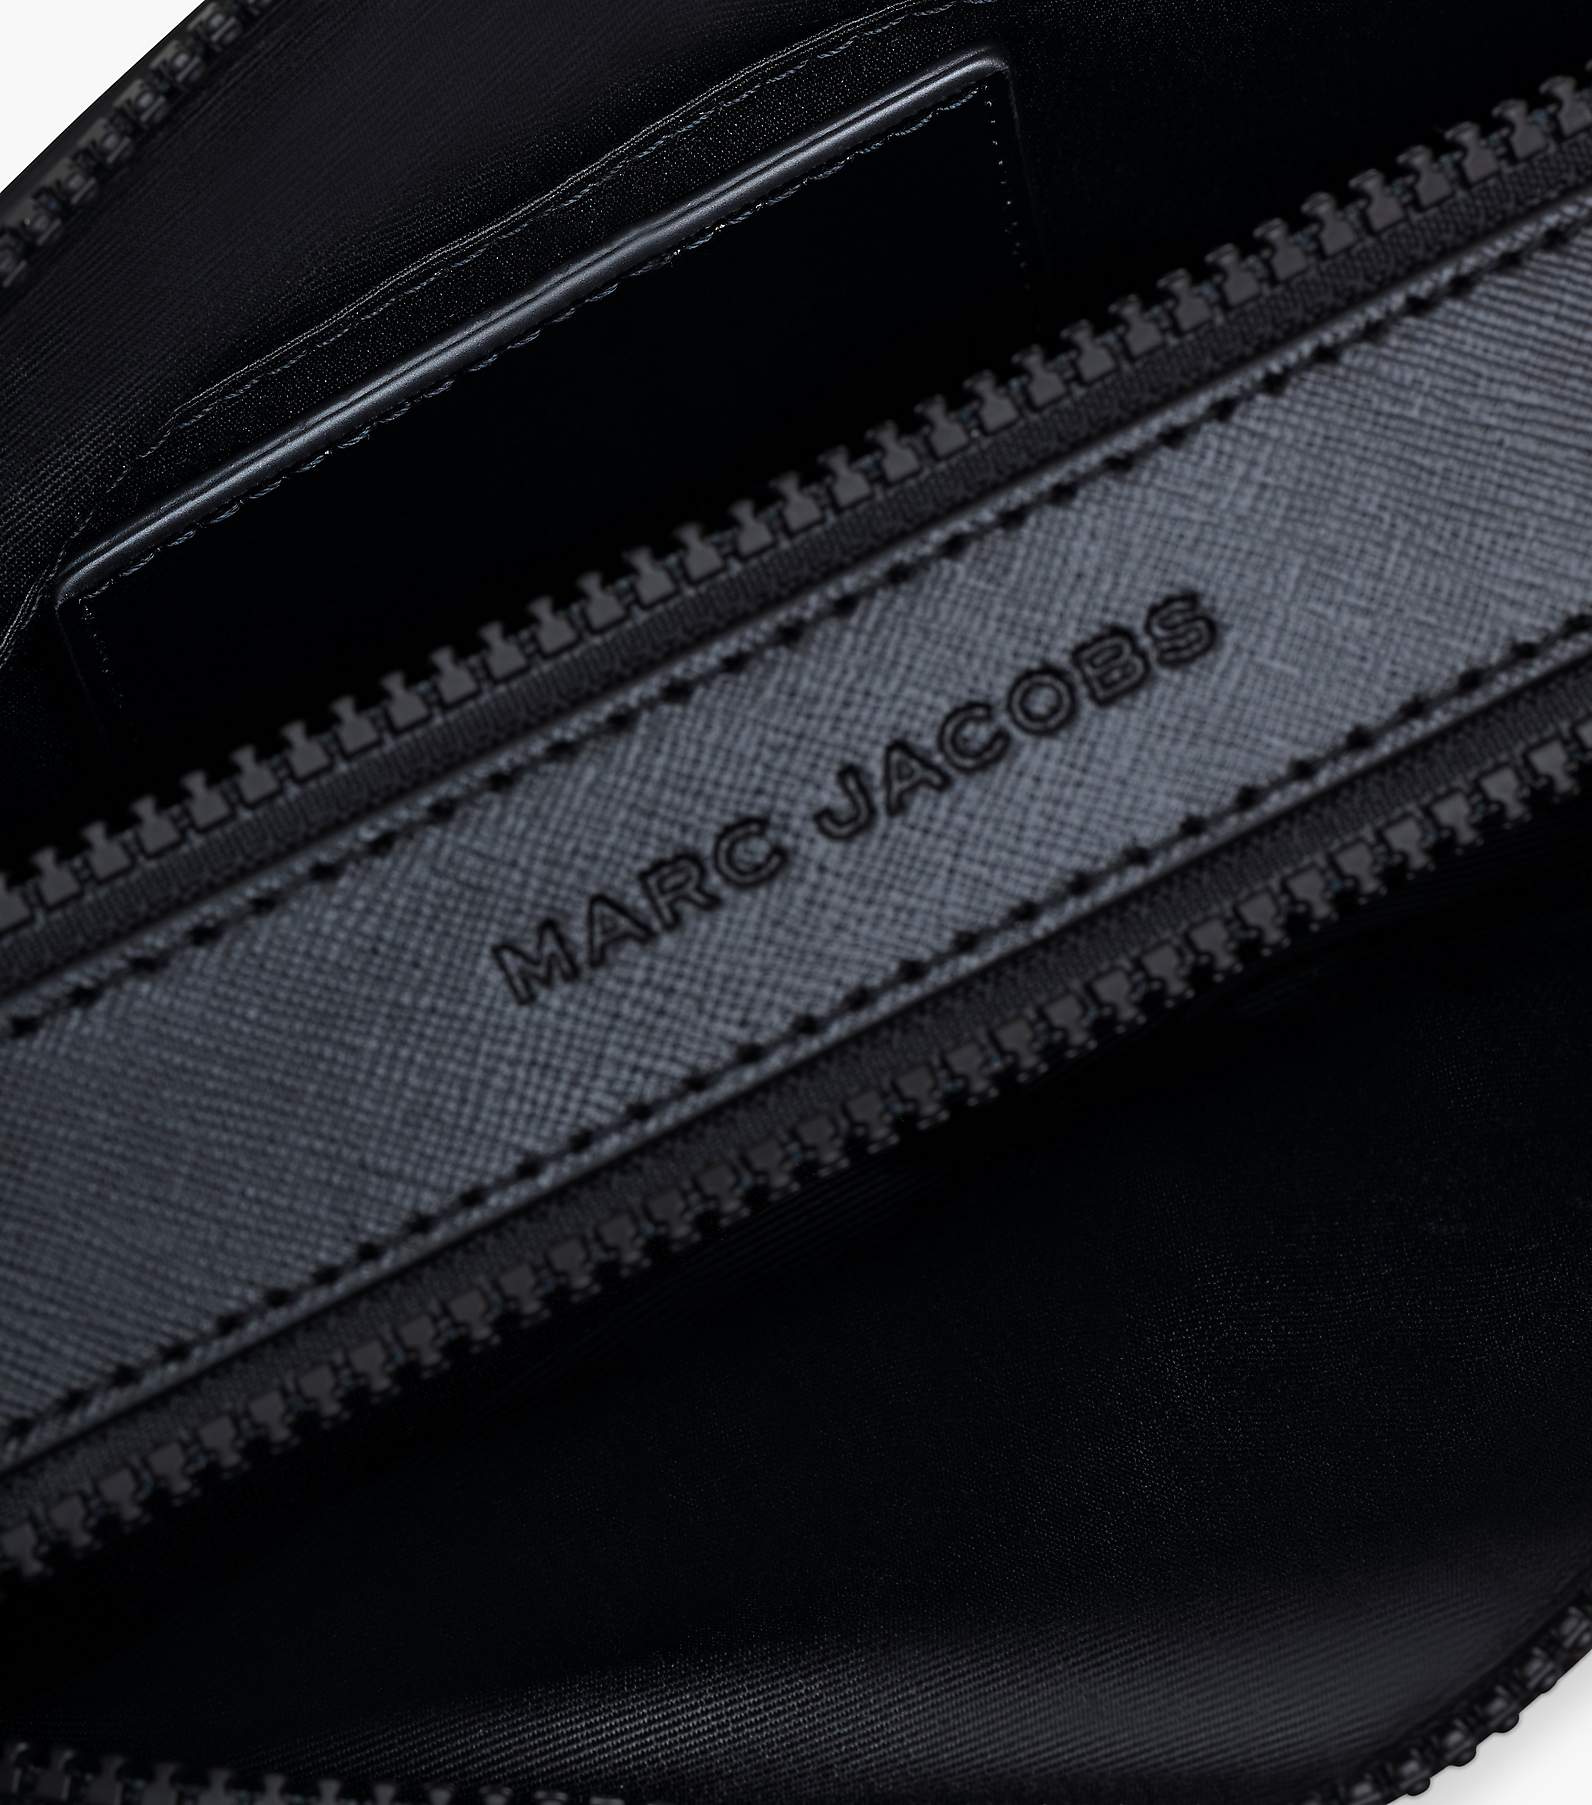 Marc Jacobs Black 'The Snapshot DTM' Bag